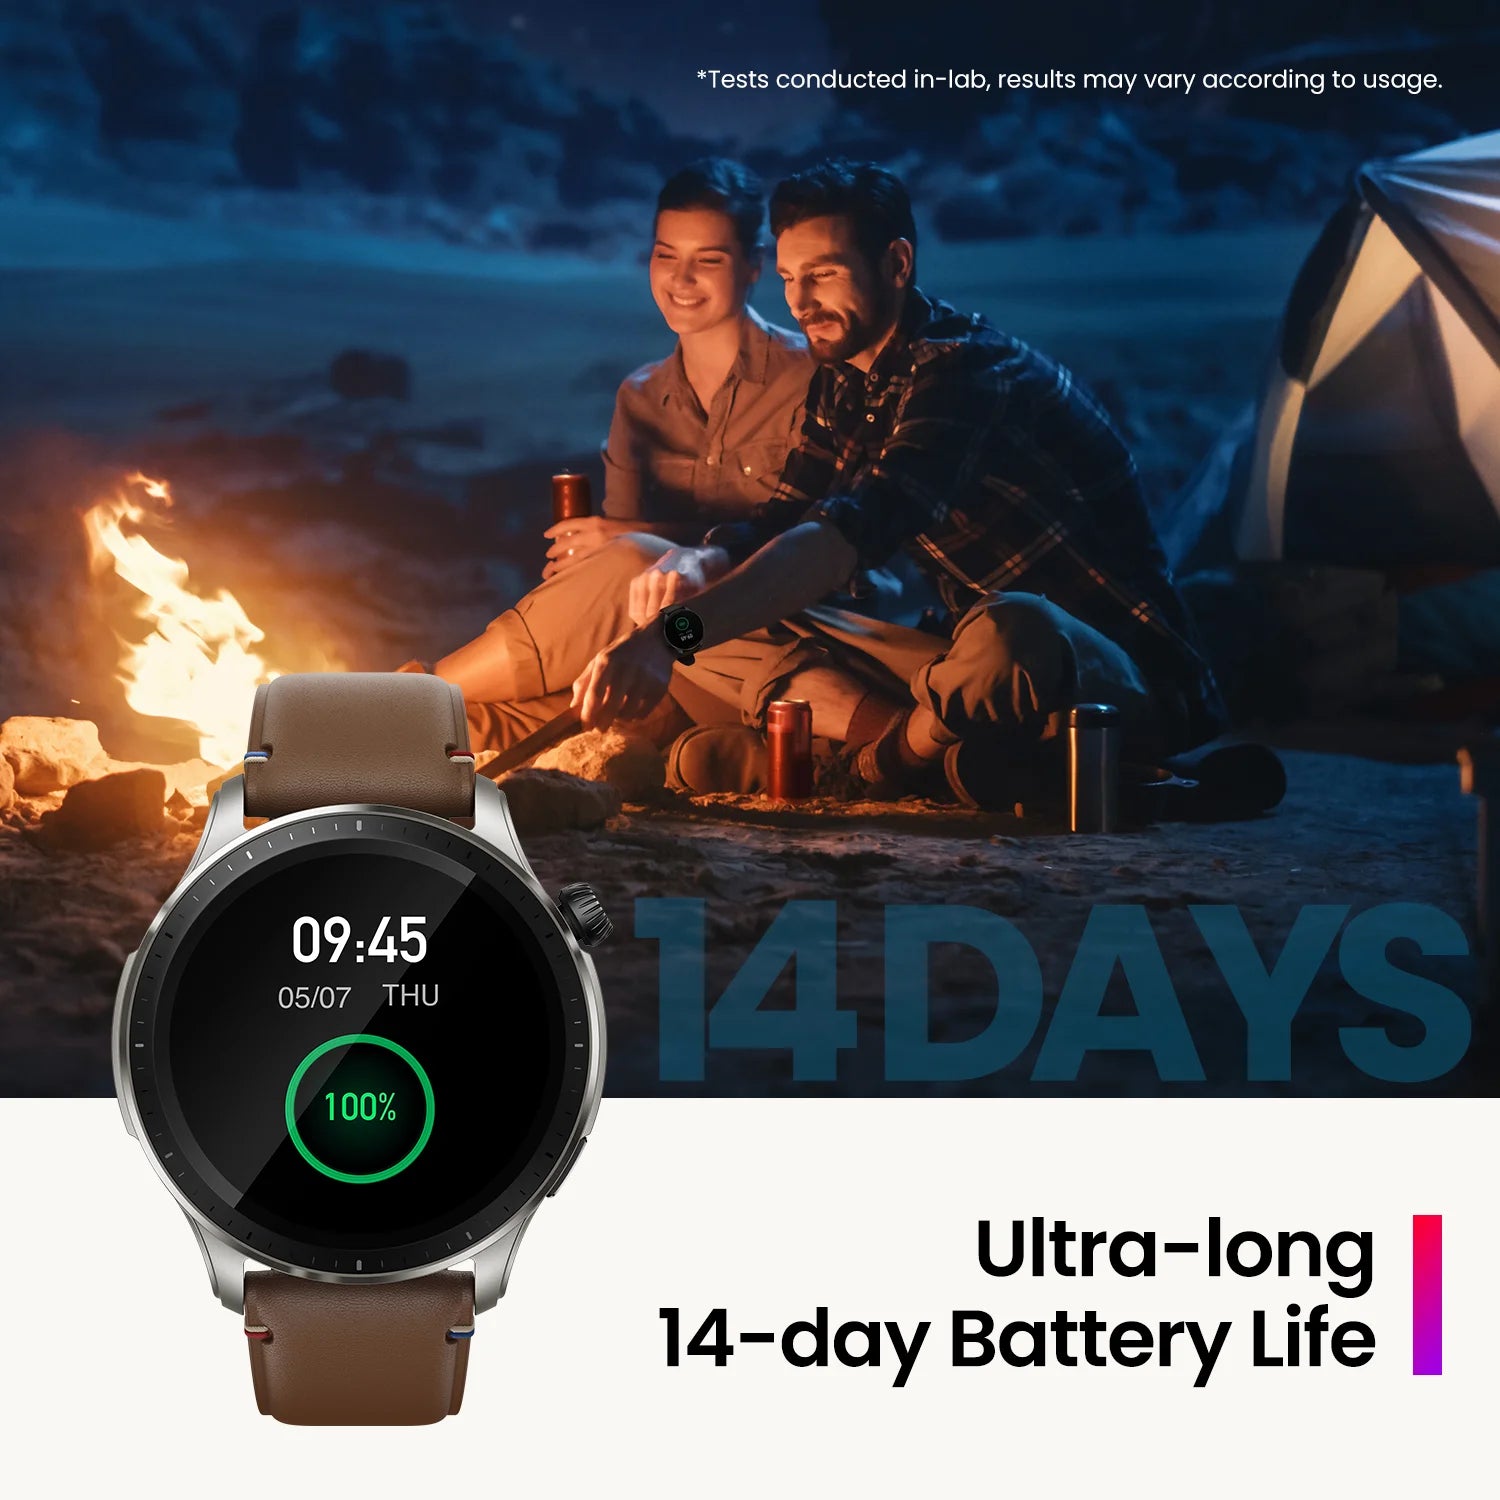 NEW Amazfit GTR 4 Smartwatch Alexa Built 150 Sports Modes Bluetooth Phone Calls Smart Watch 14Days Battery Life - Madeinsea©